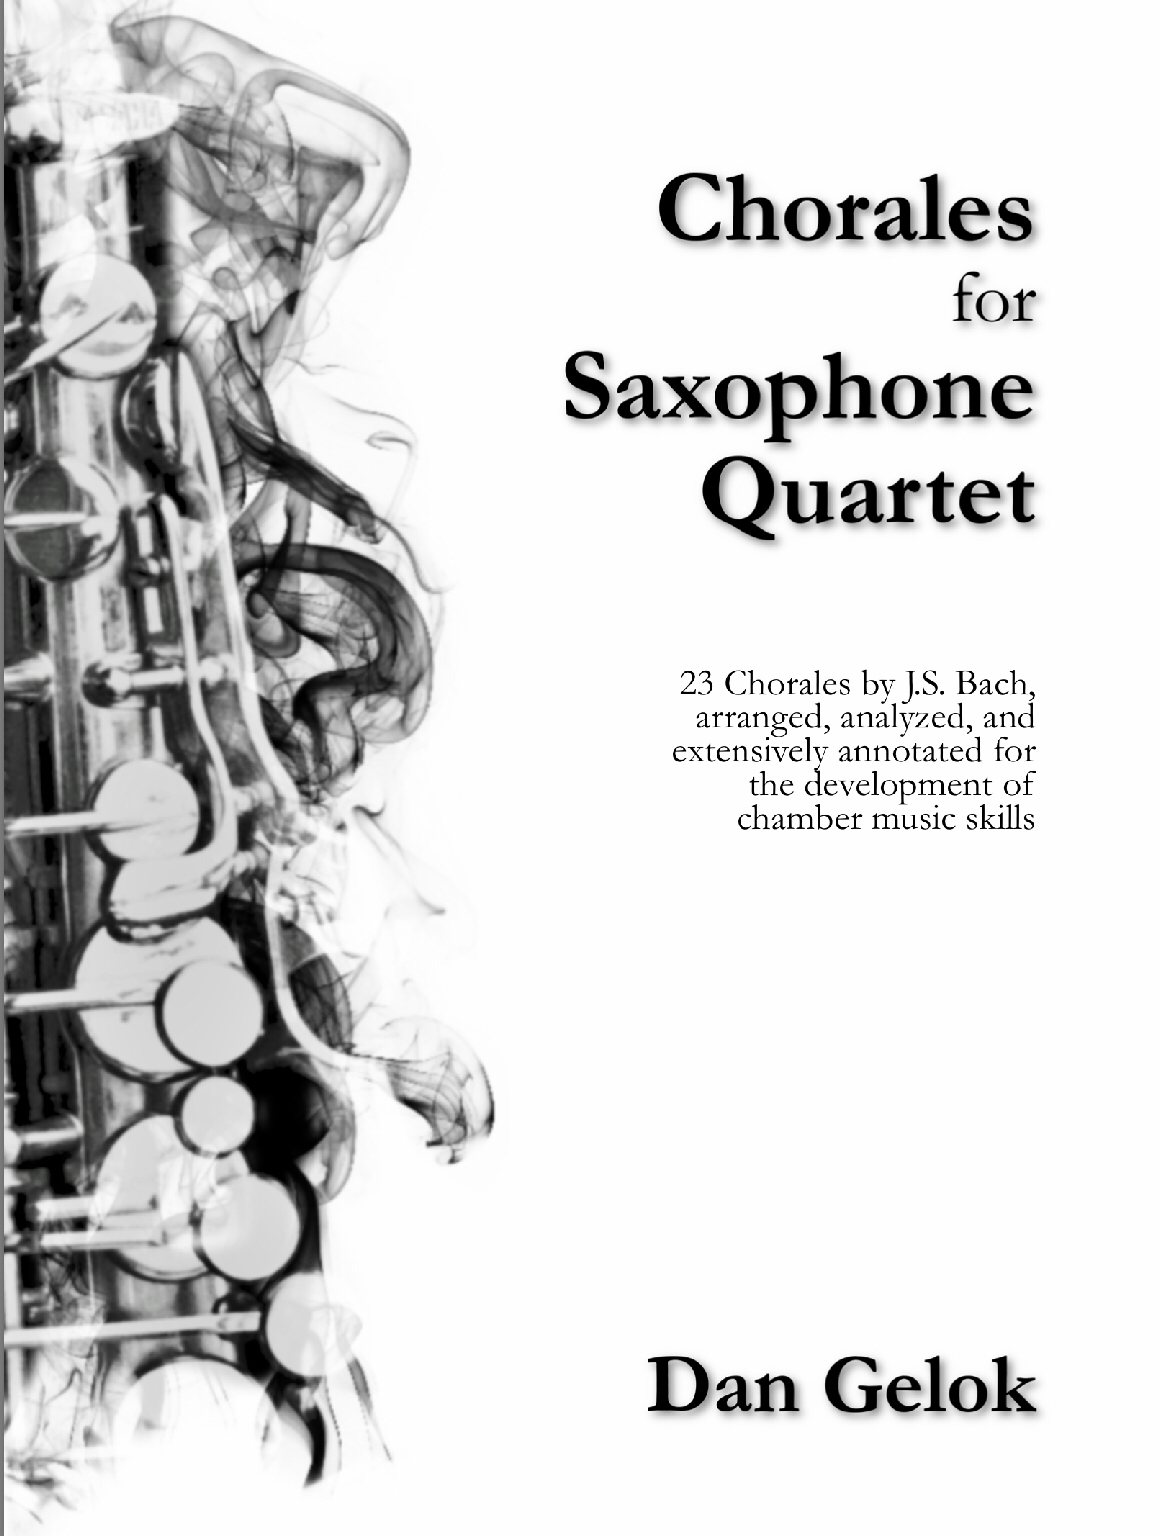 Chorales For Saxophone Quartet by Dan Gelok